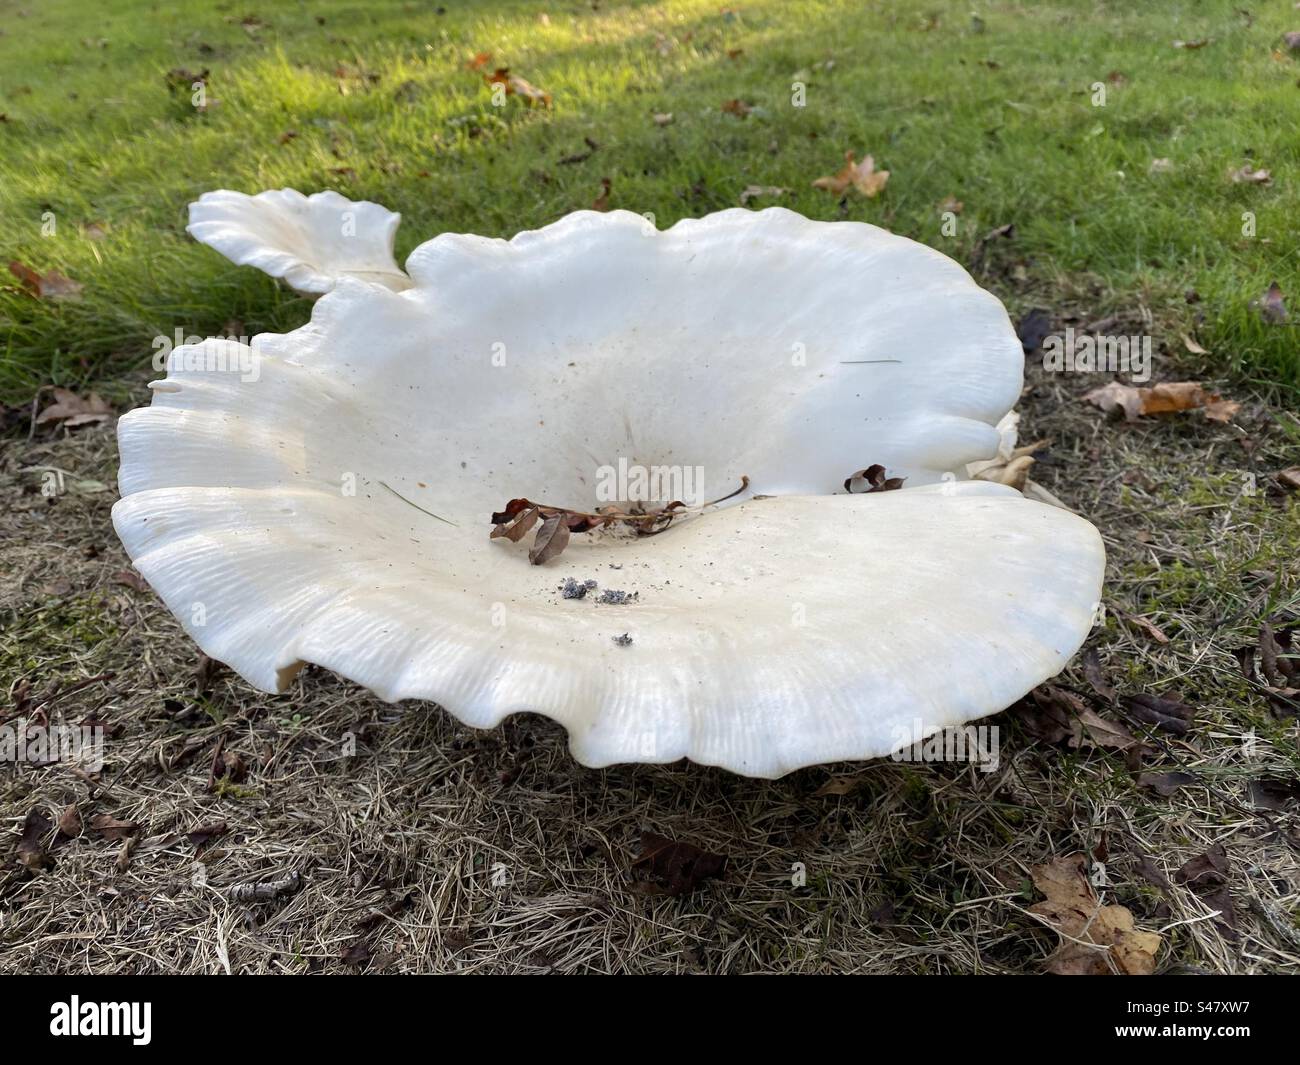 Giant fennel mushroom on grass Stock Photo